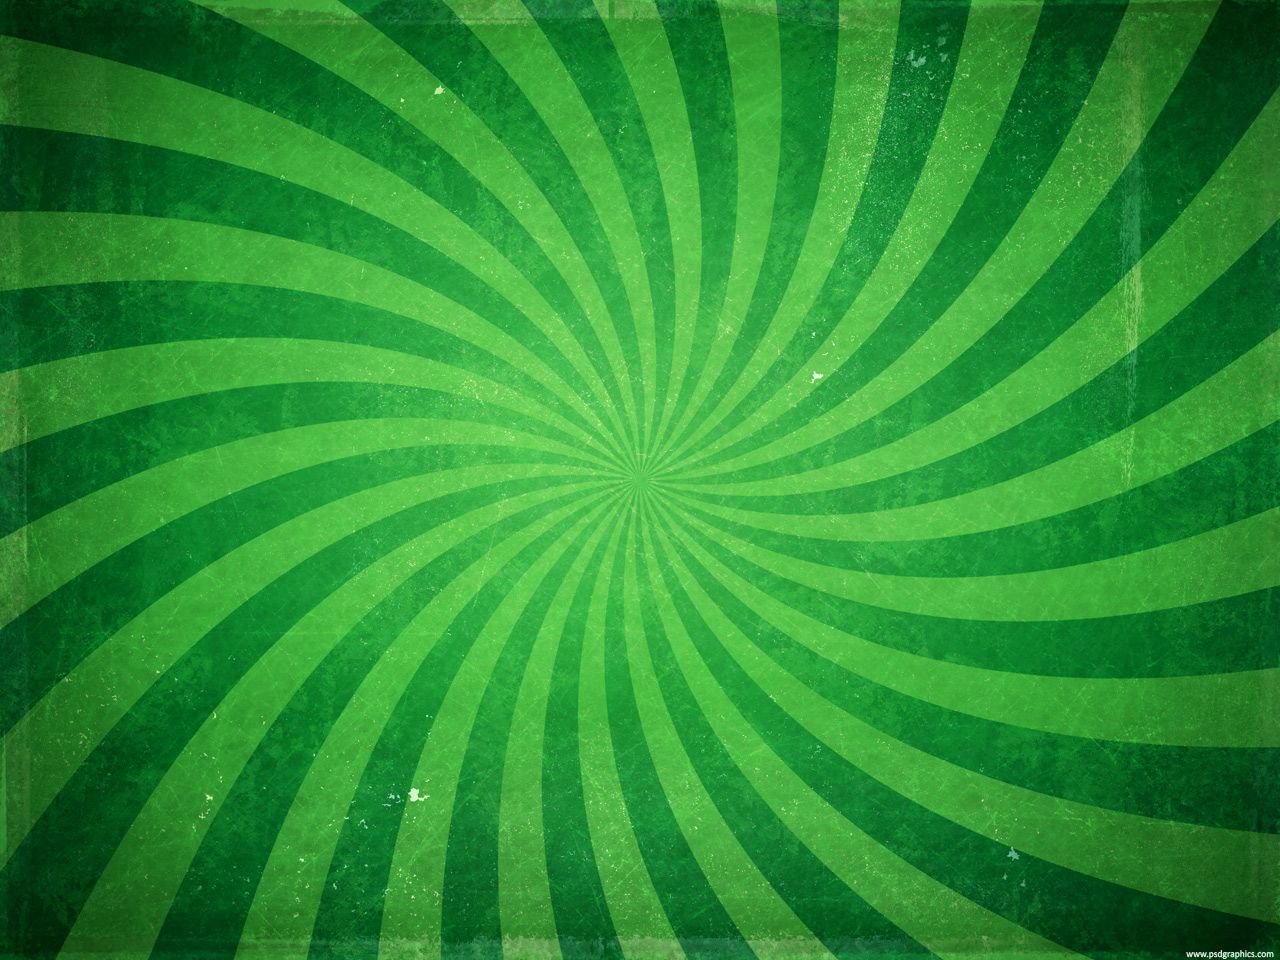 Grungy green swirl background wallpaper textured background wallpaper free download